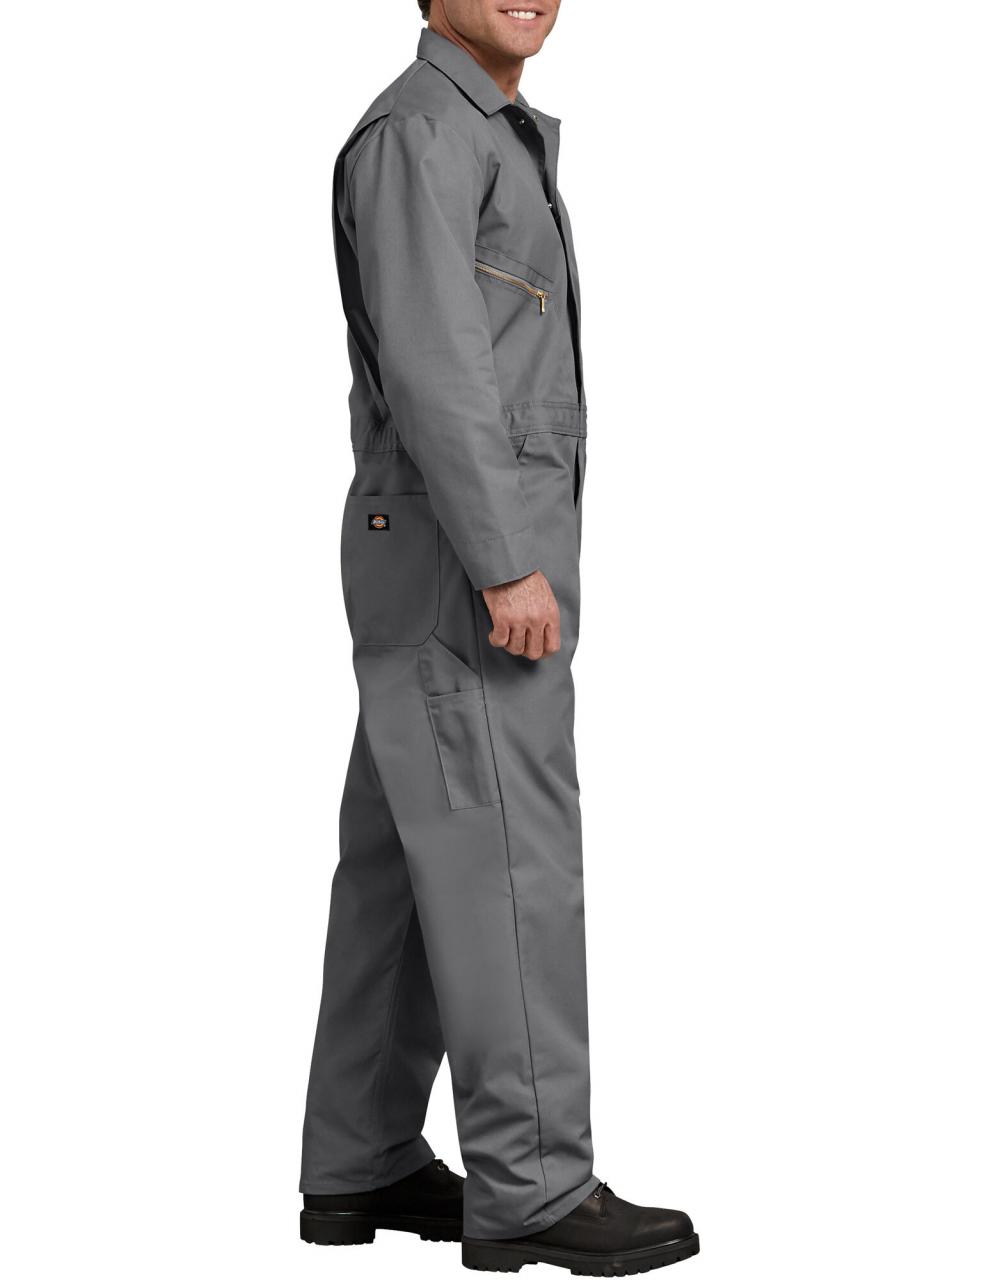 Work Coveralls for Men | Uniform Coveralls